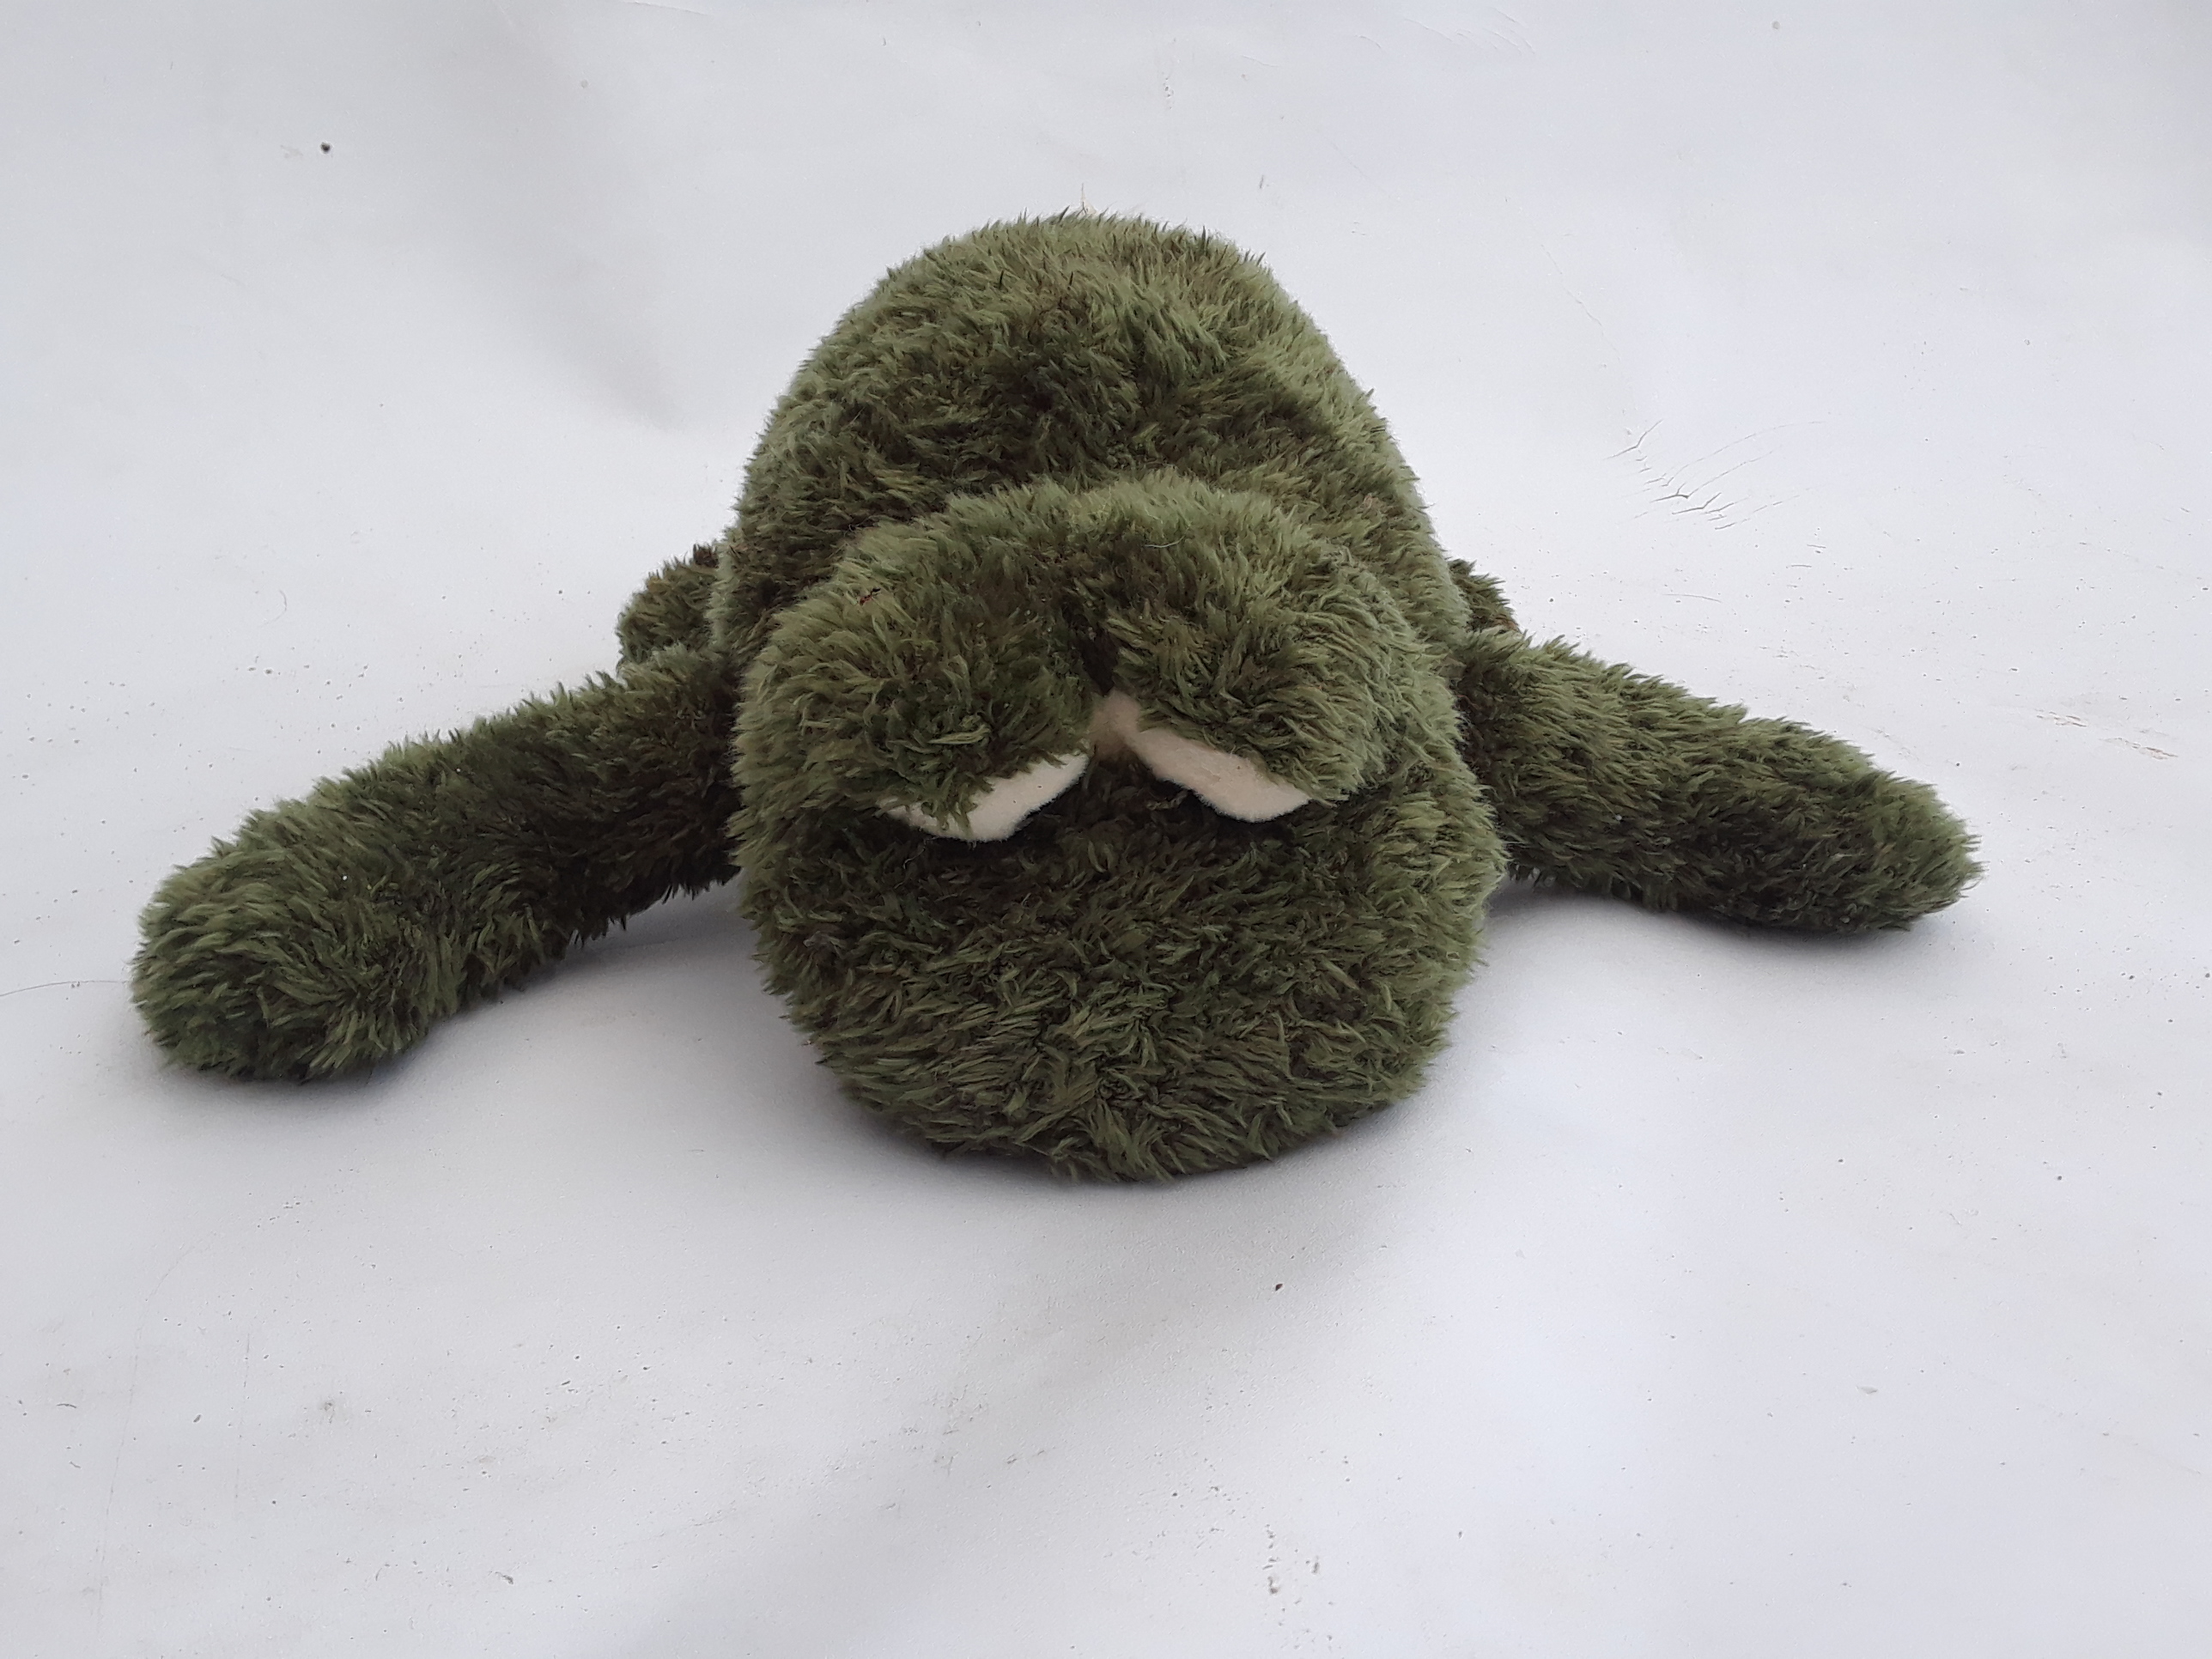 Stuffed Animal Frog by Gund